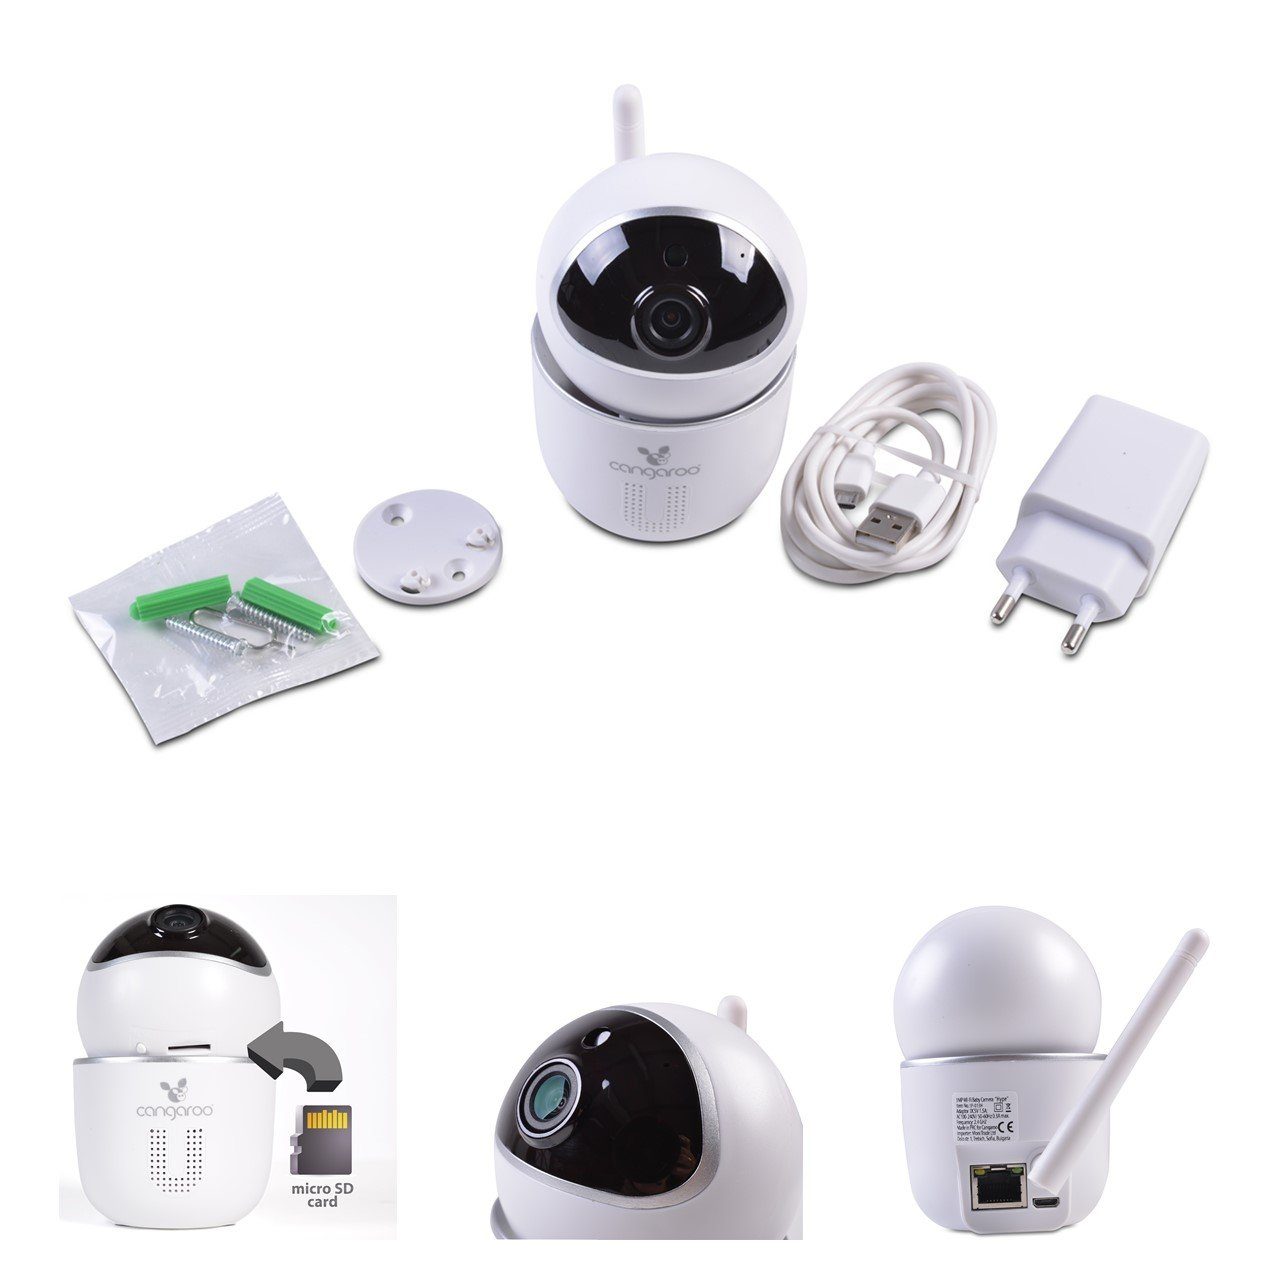 Cangaroo Video-Babyphone Babyphone Hype, Wi-Fi/Lan, Kamera, 360° Drehung, LED-Infrarot Nachsicht